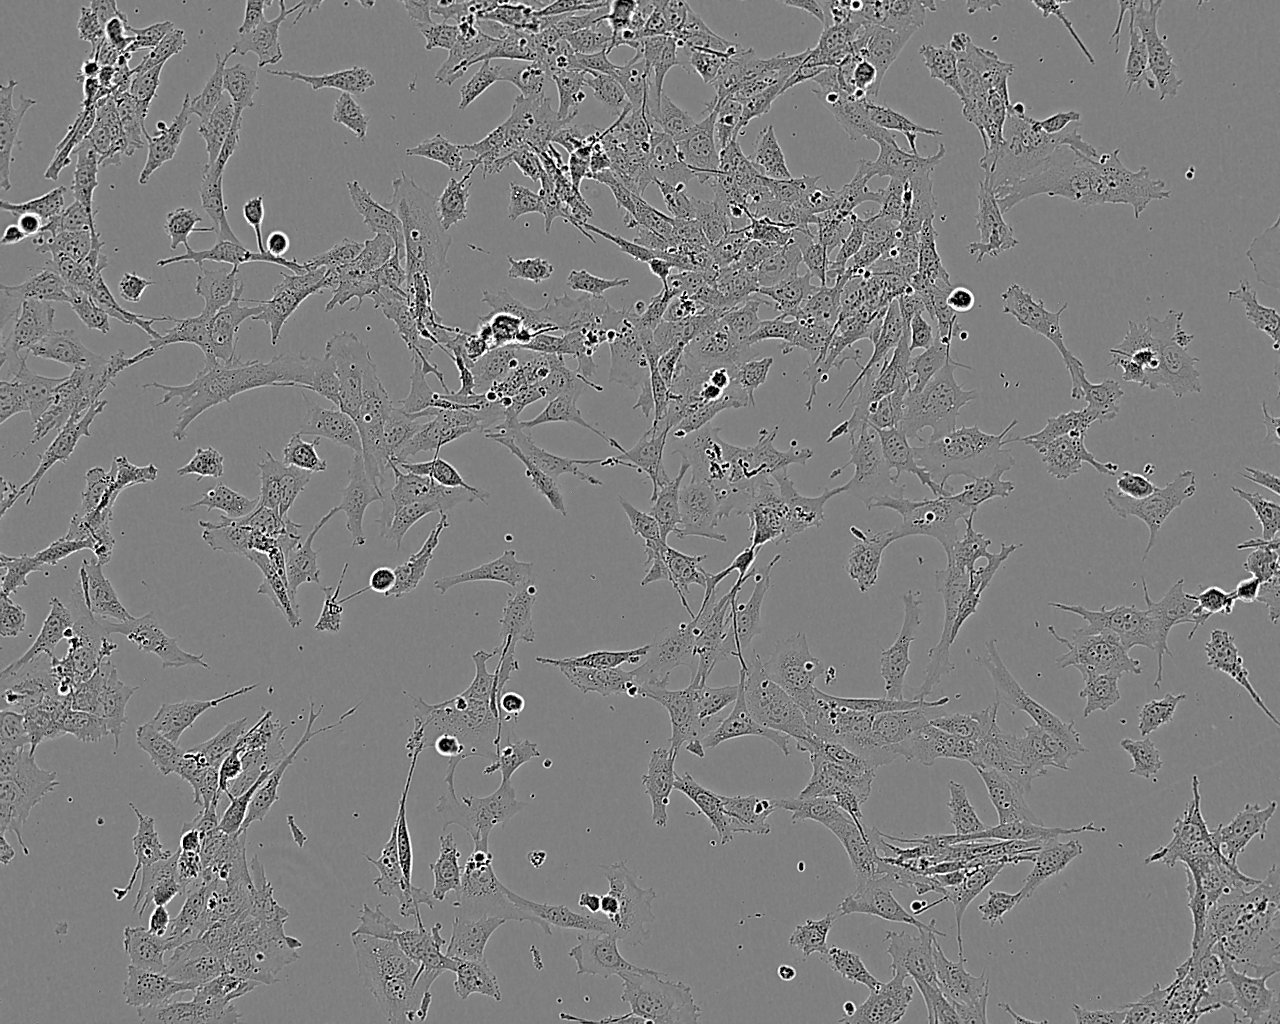 BHK-21 fibroblast cells仓鼠肾成纤维细胞系